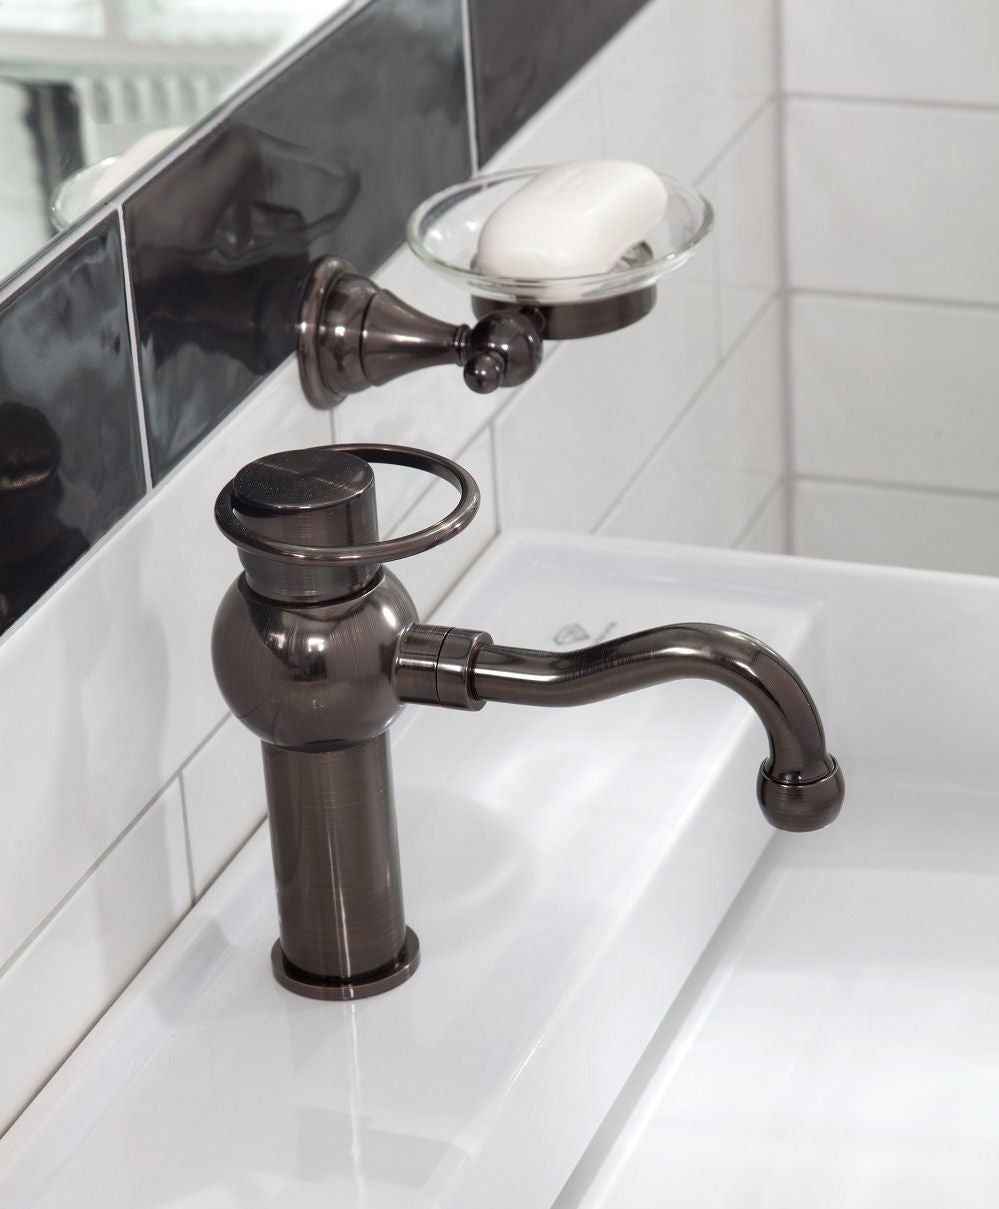 Design Soap Holder Oil Rubbed Bronze - |VESIMI Design| Luxury and Rustic bathrooms online